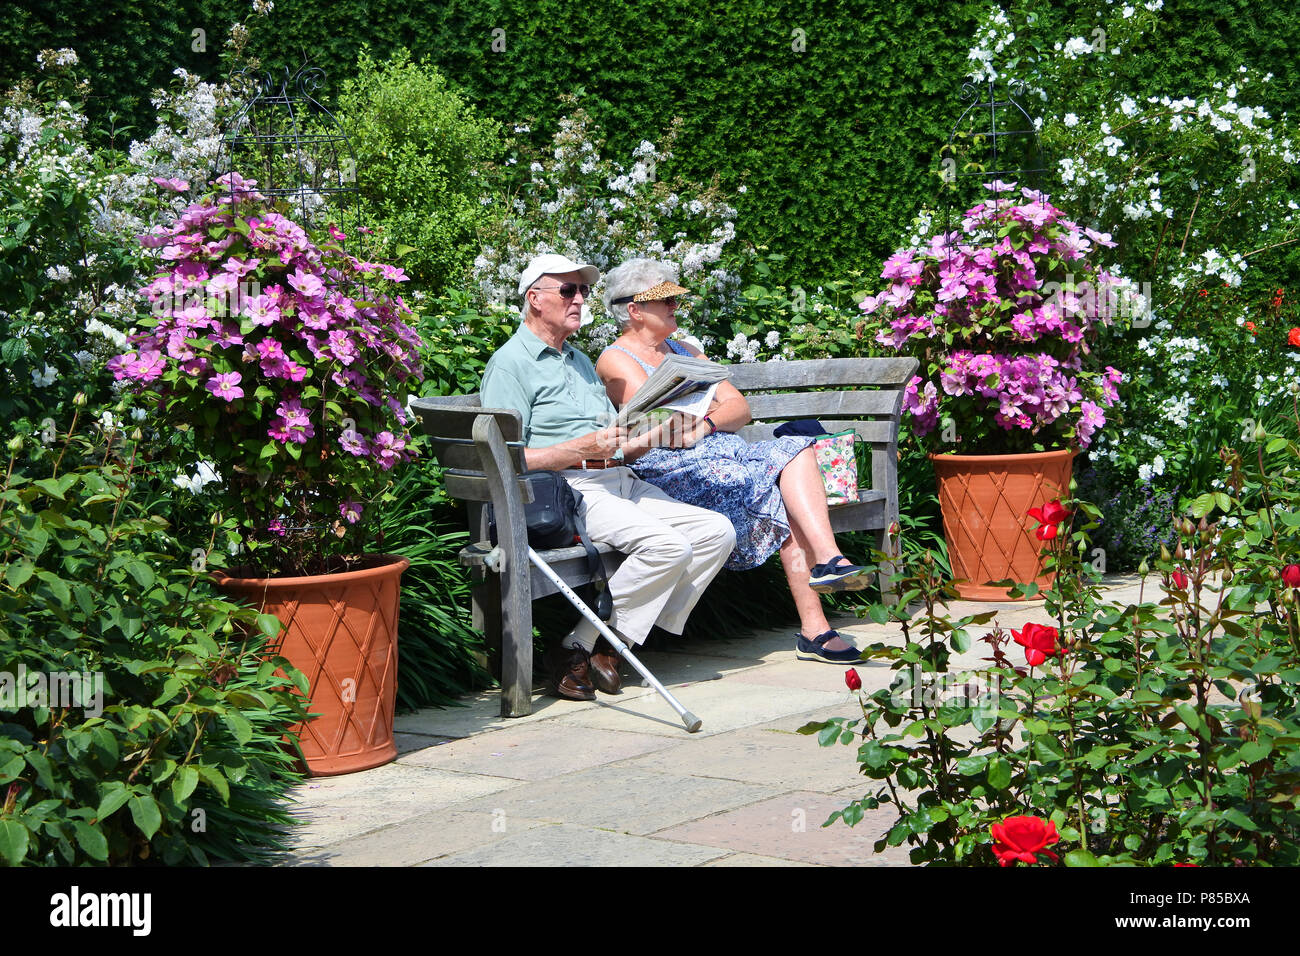 An elderly couple sitting in a garden, RHS Rosemoor, Devon, UK - John Gollop Stock Photo